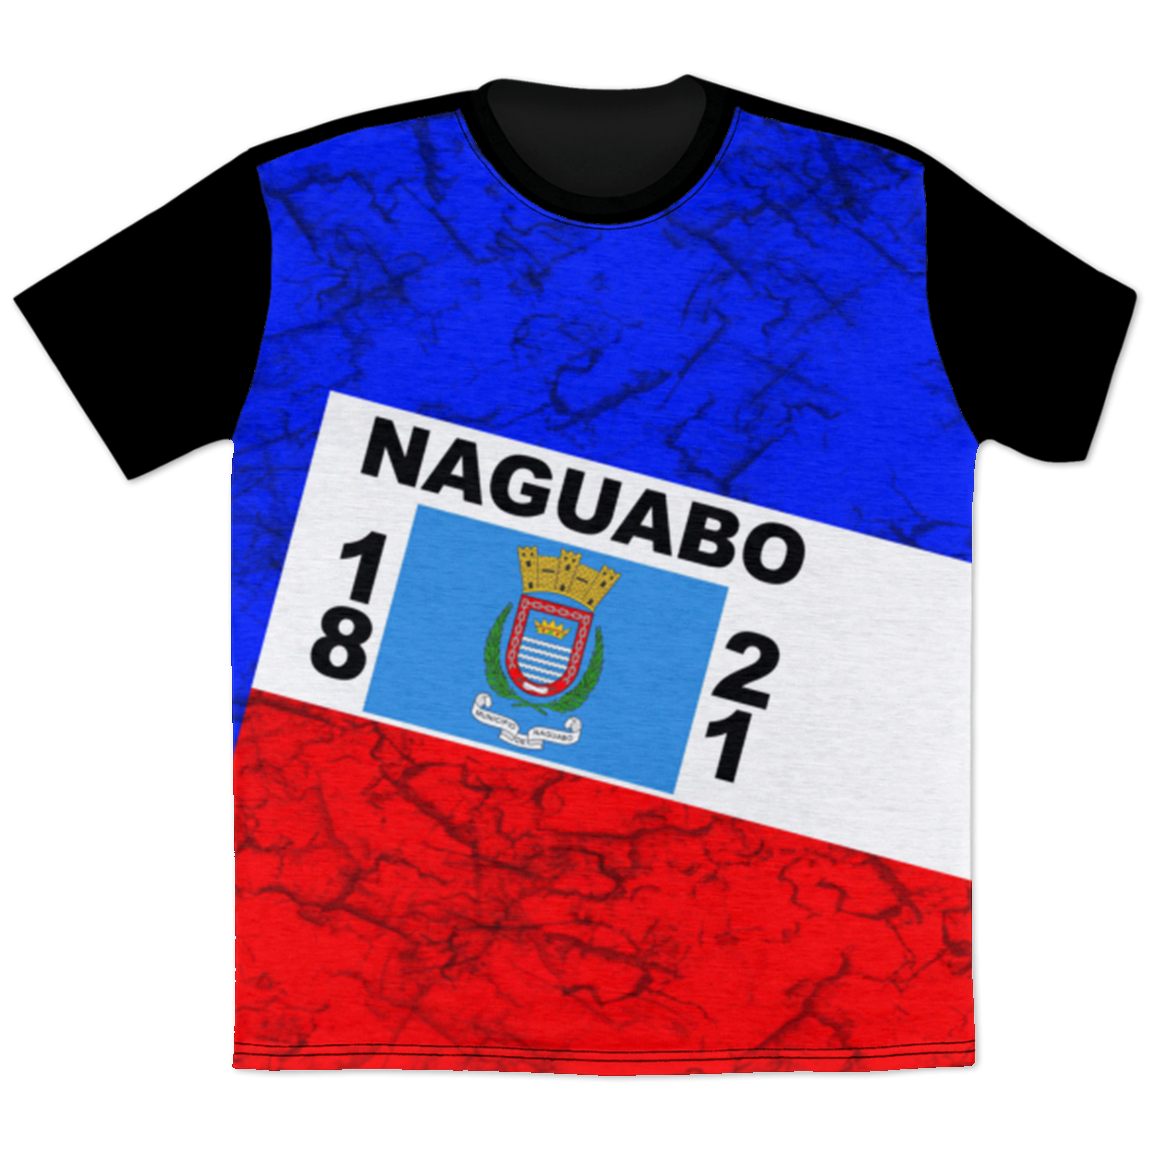 Naguabo T-Shirt - Puerto Rican Pride